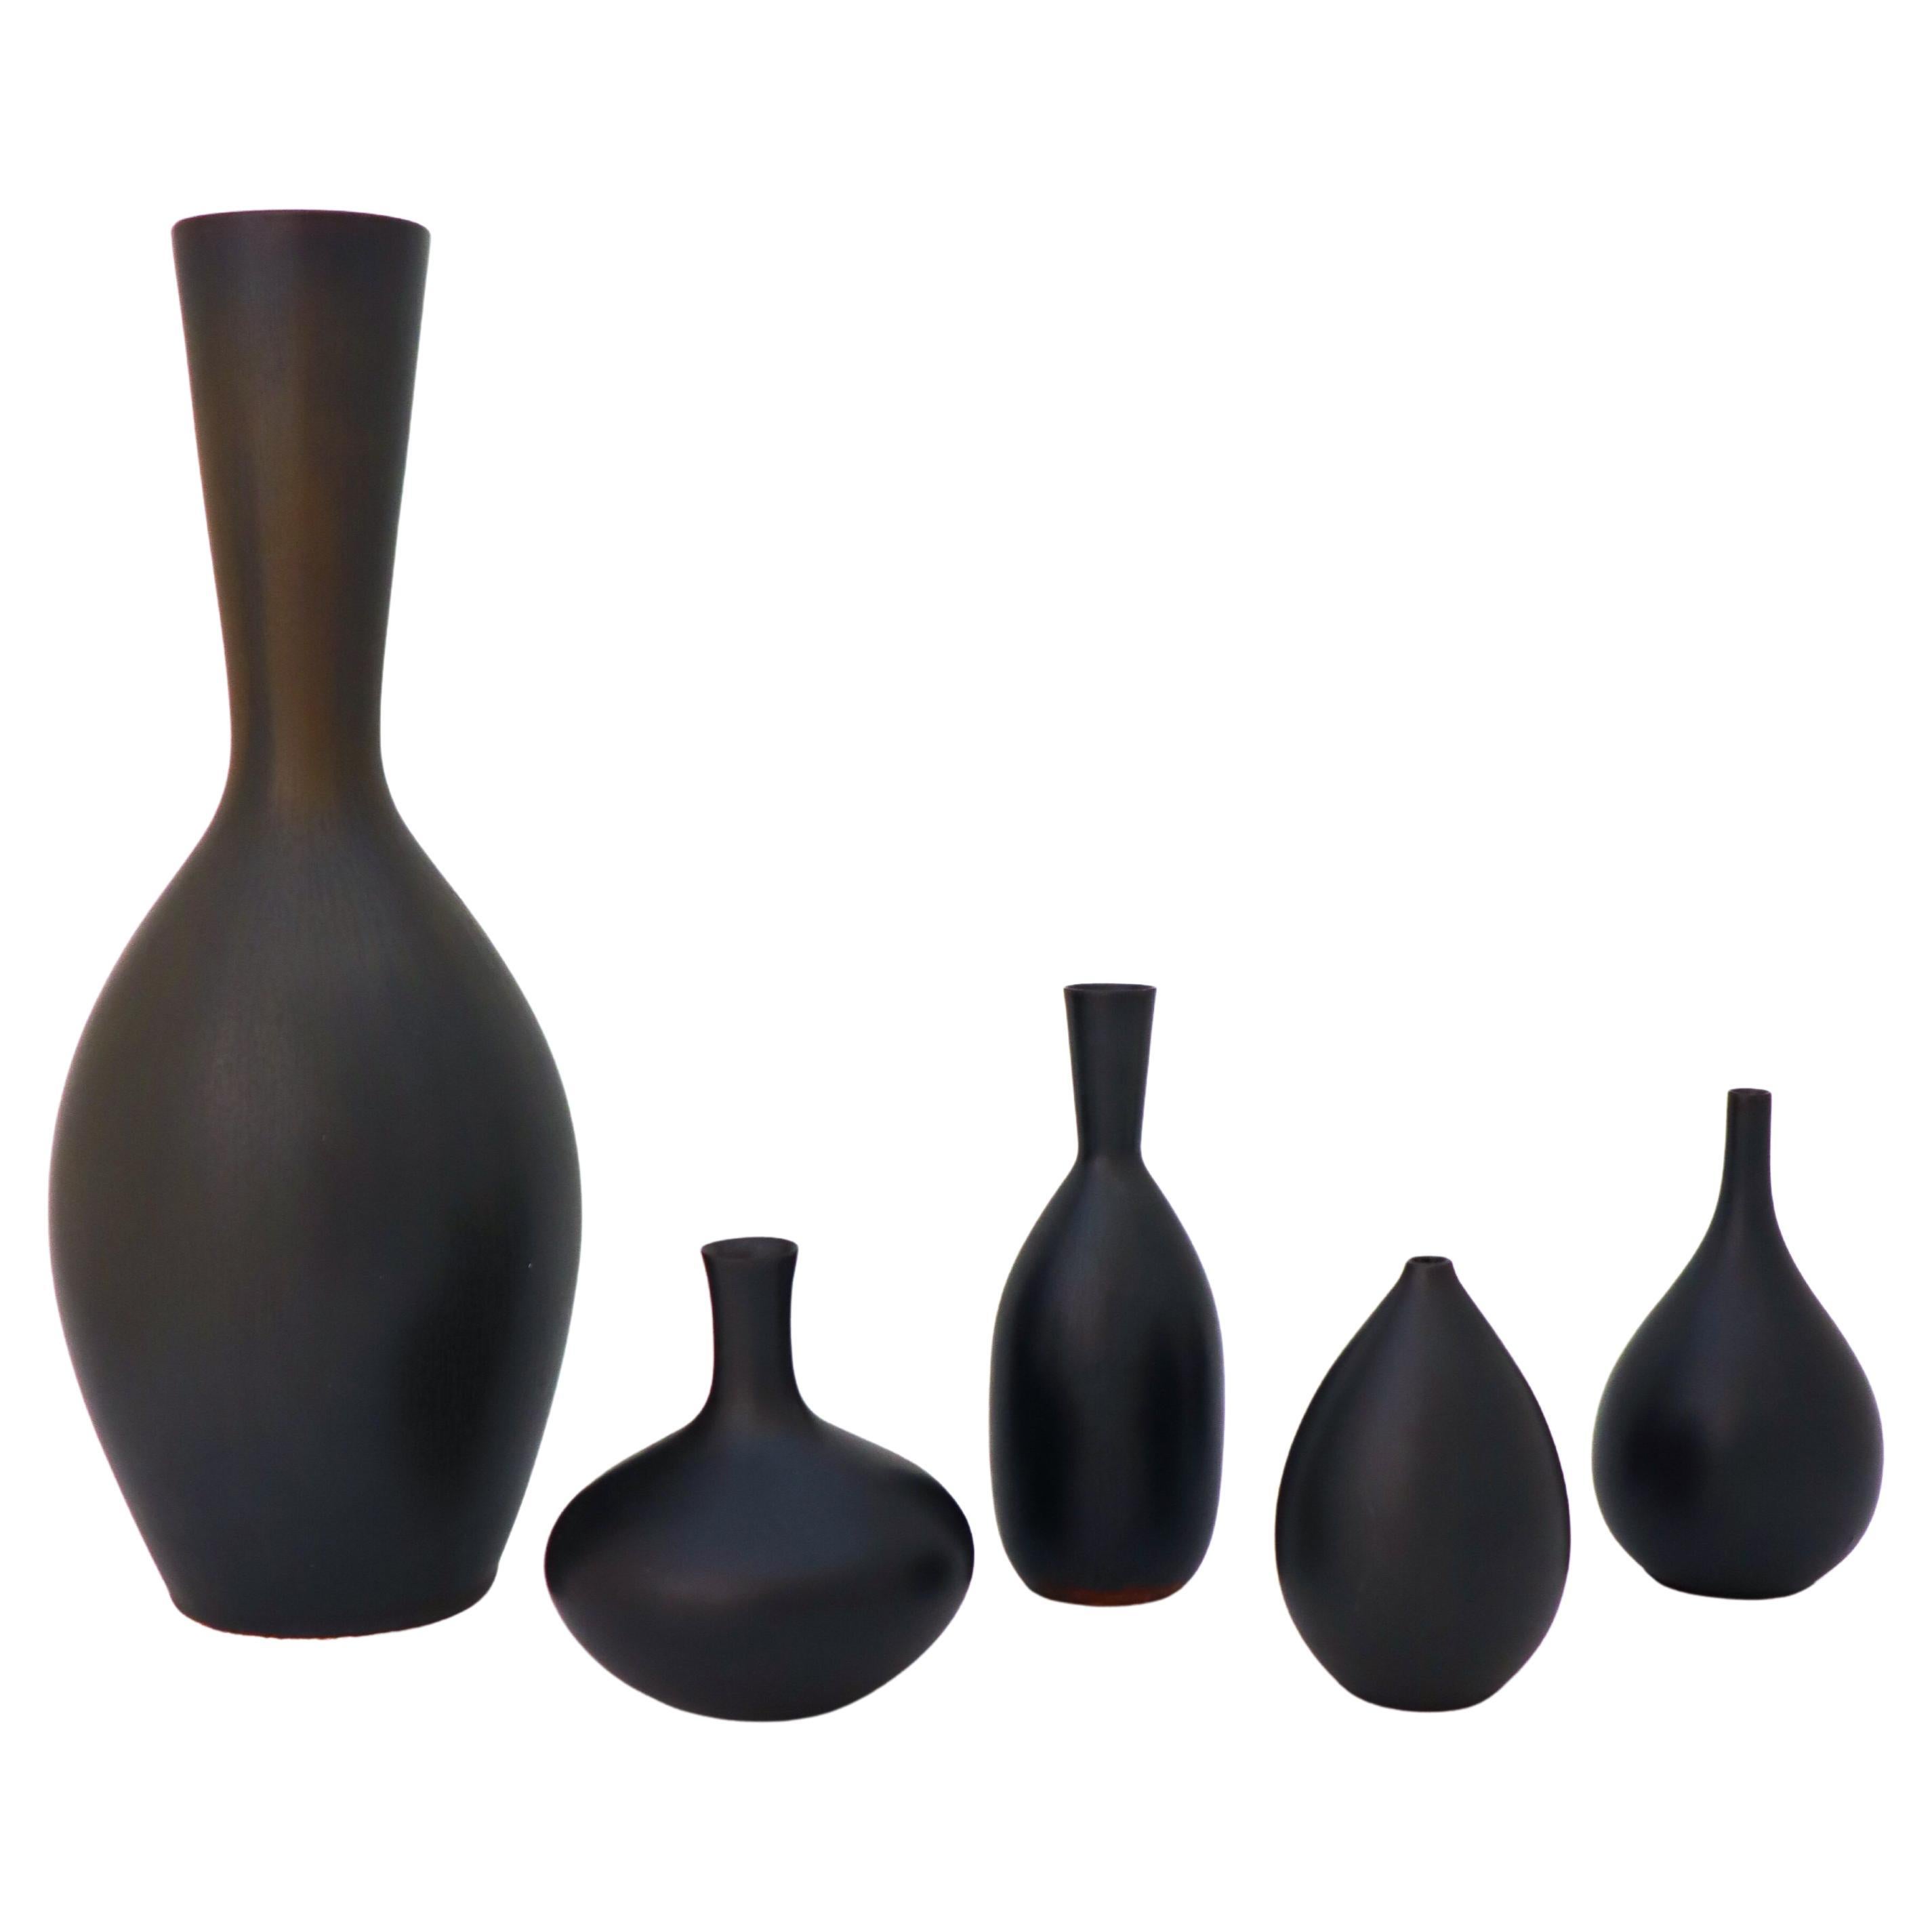 Group of 5 Black Vases Ceramics, Rörstrand Carl-Harry Stålhane, Midcentury